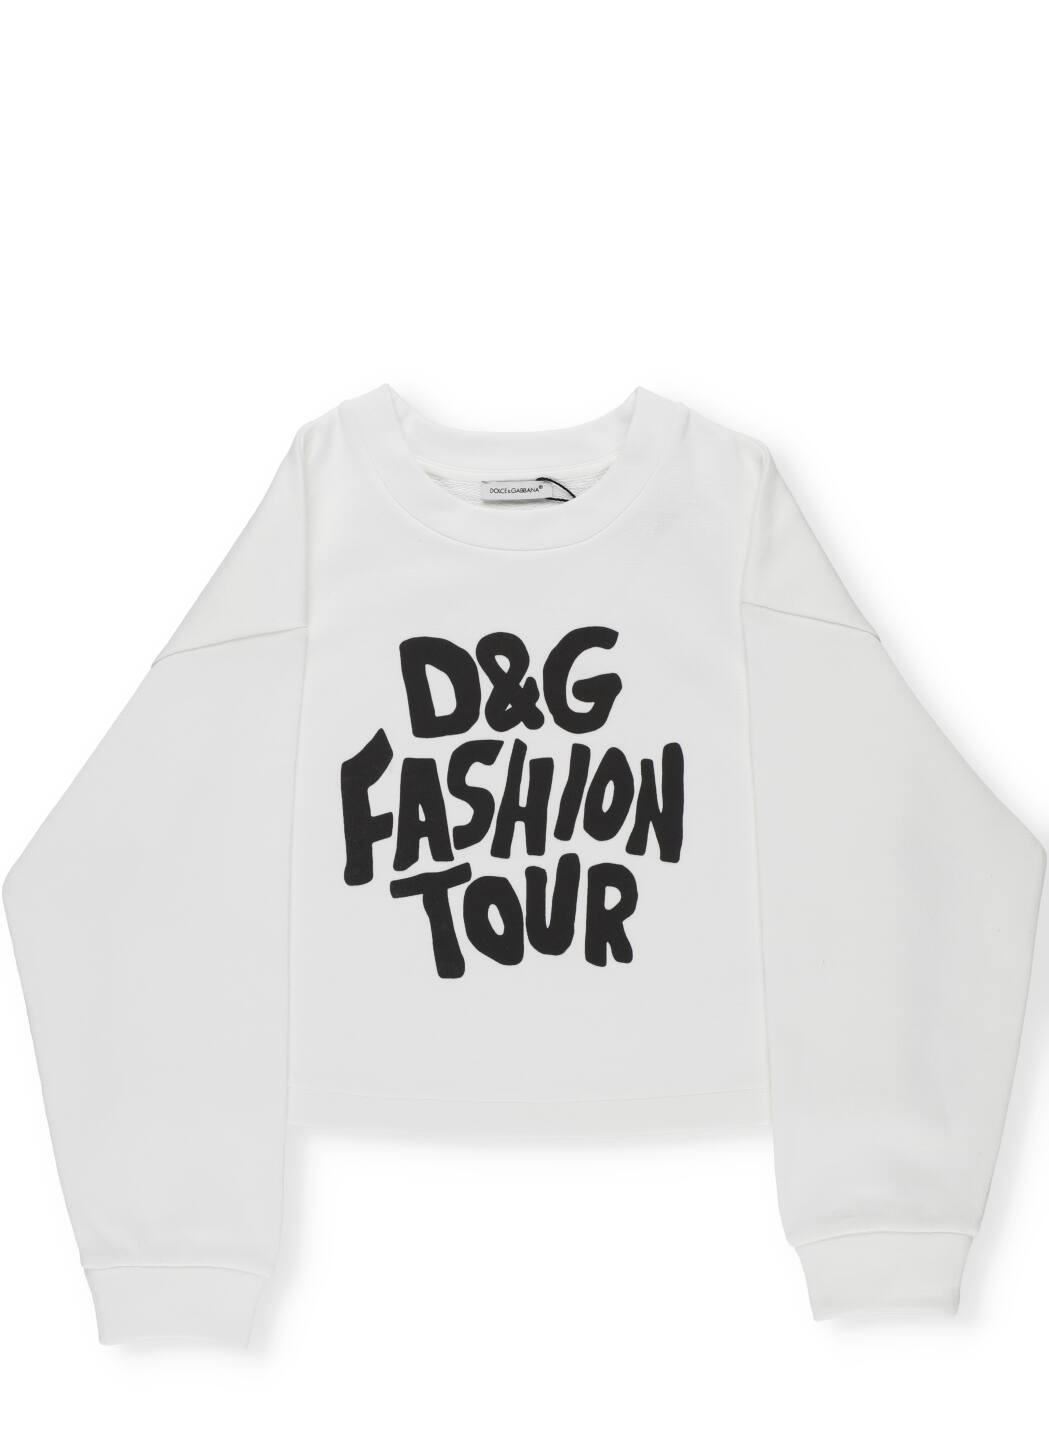 Dolce & Gabbana Dg Fashion Tour Sweatshirt